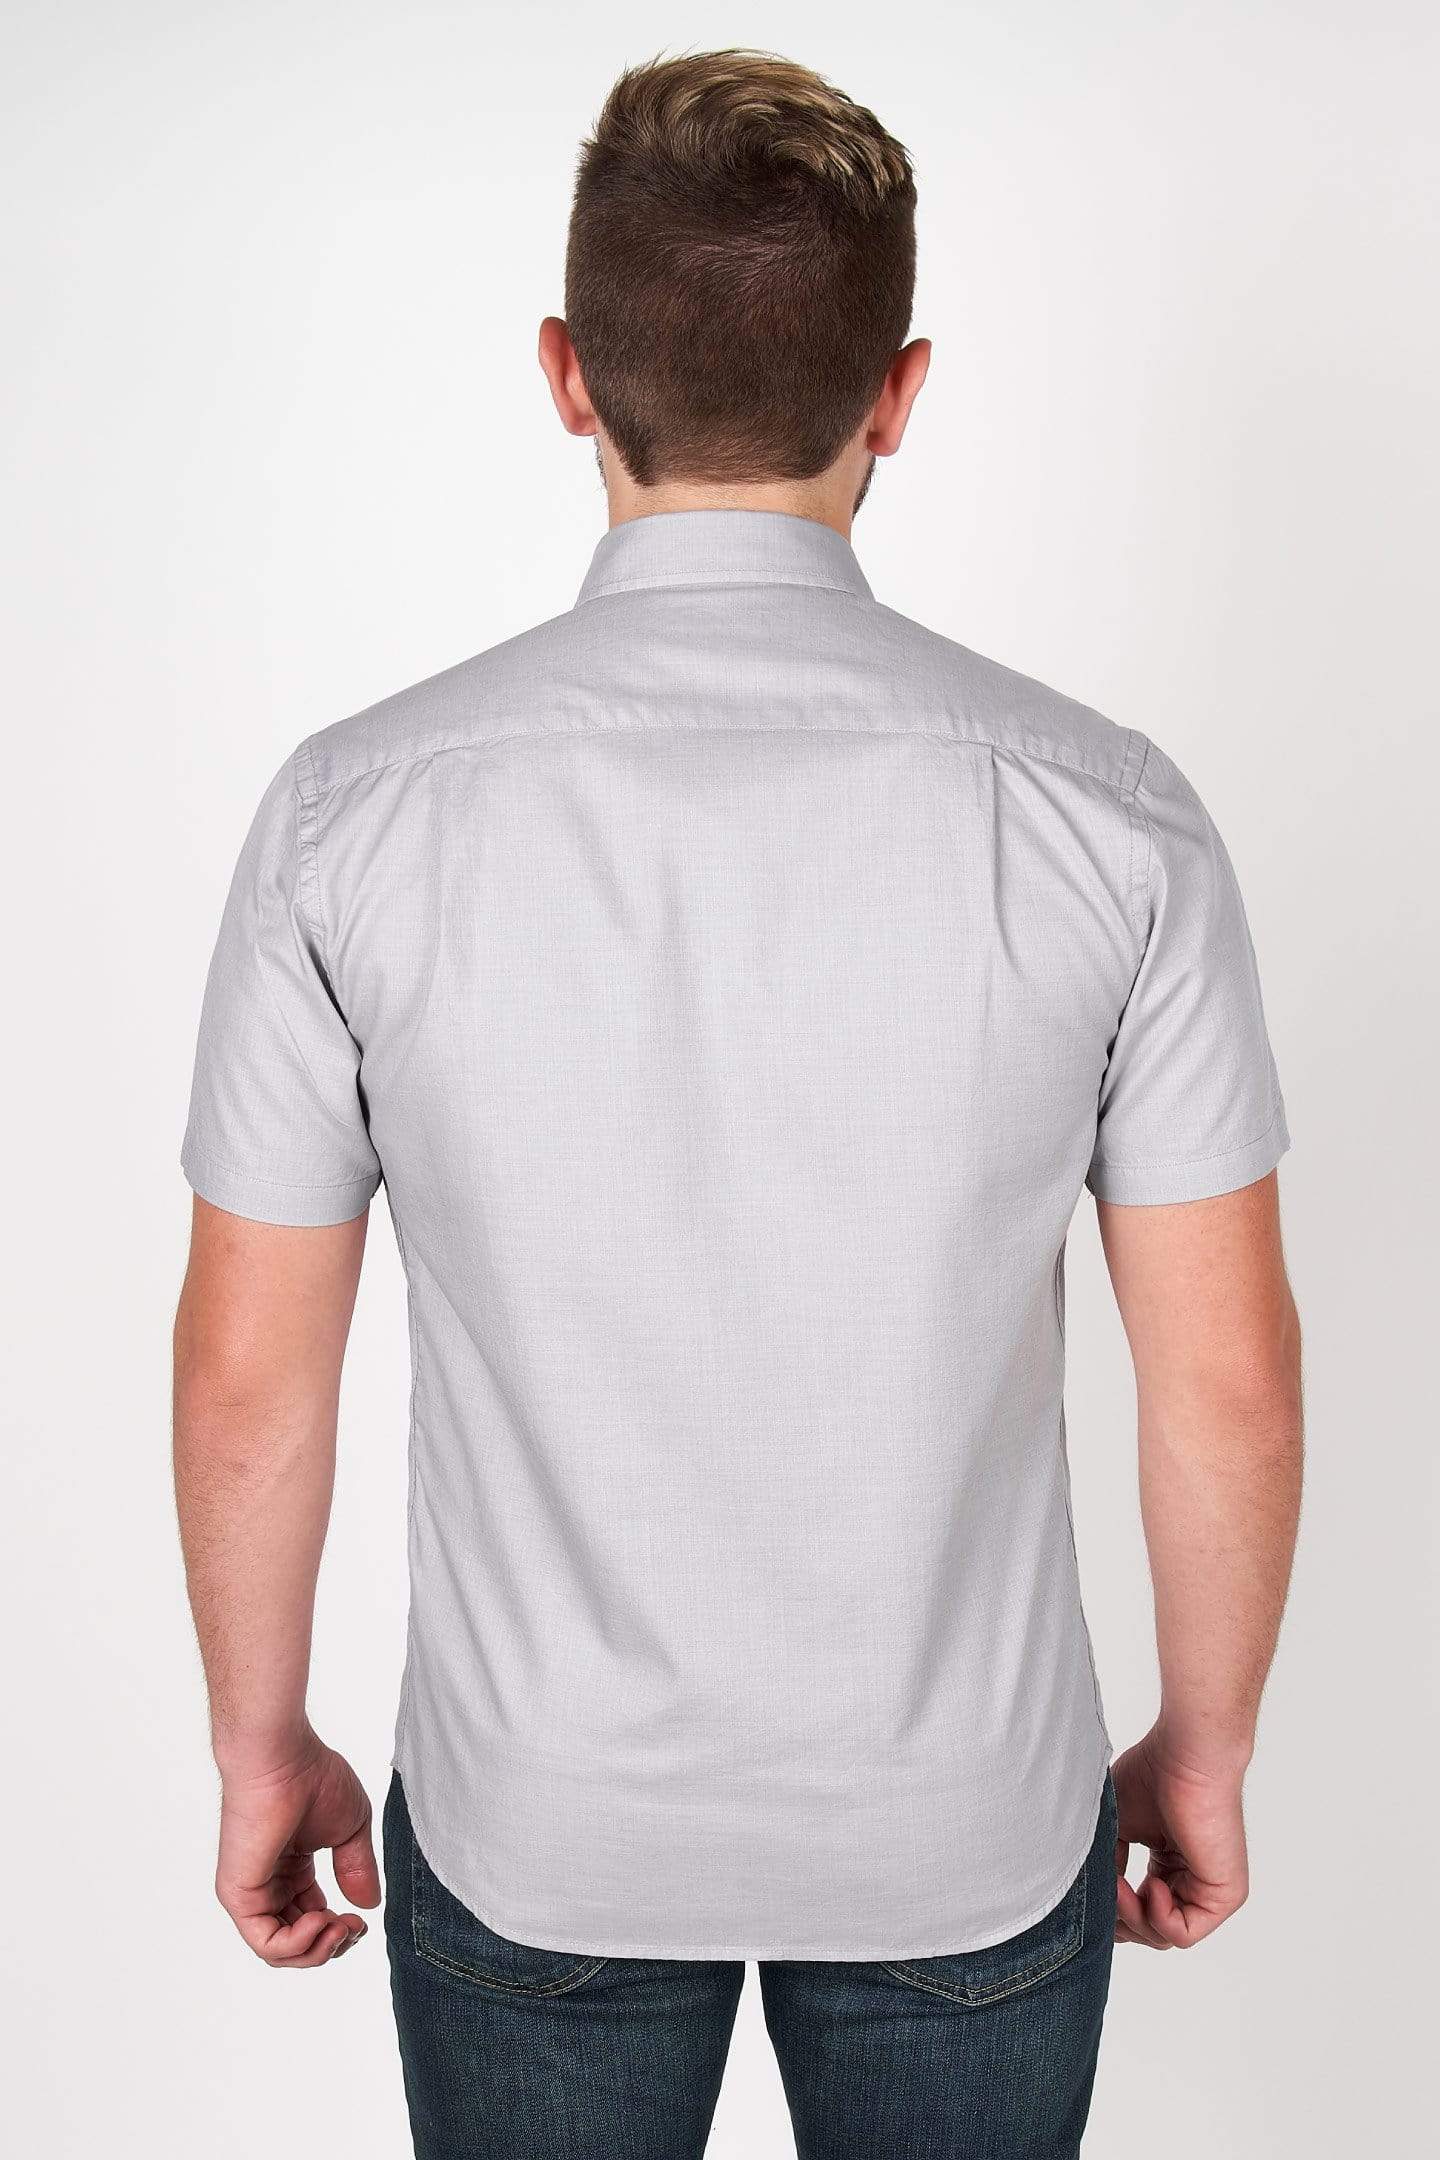 The Everyday Shirt - Concrete Short Sleeve   Short Sleeve Everyday Shirts